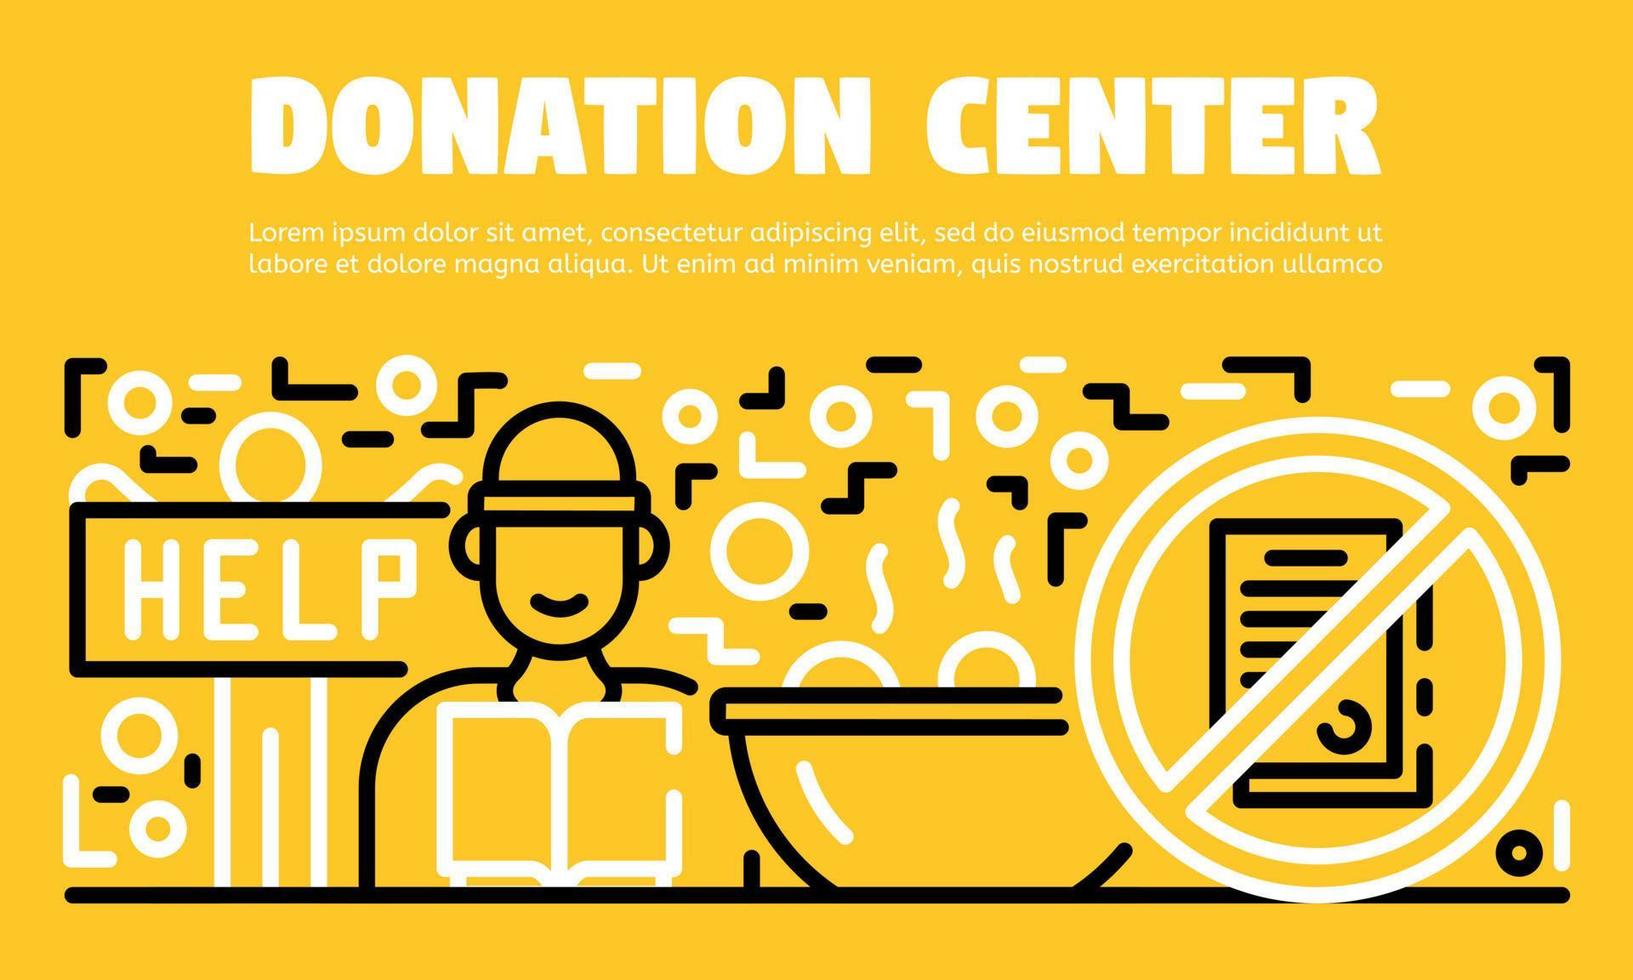 Donation center banner, outline style vector